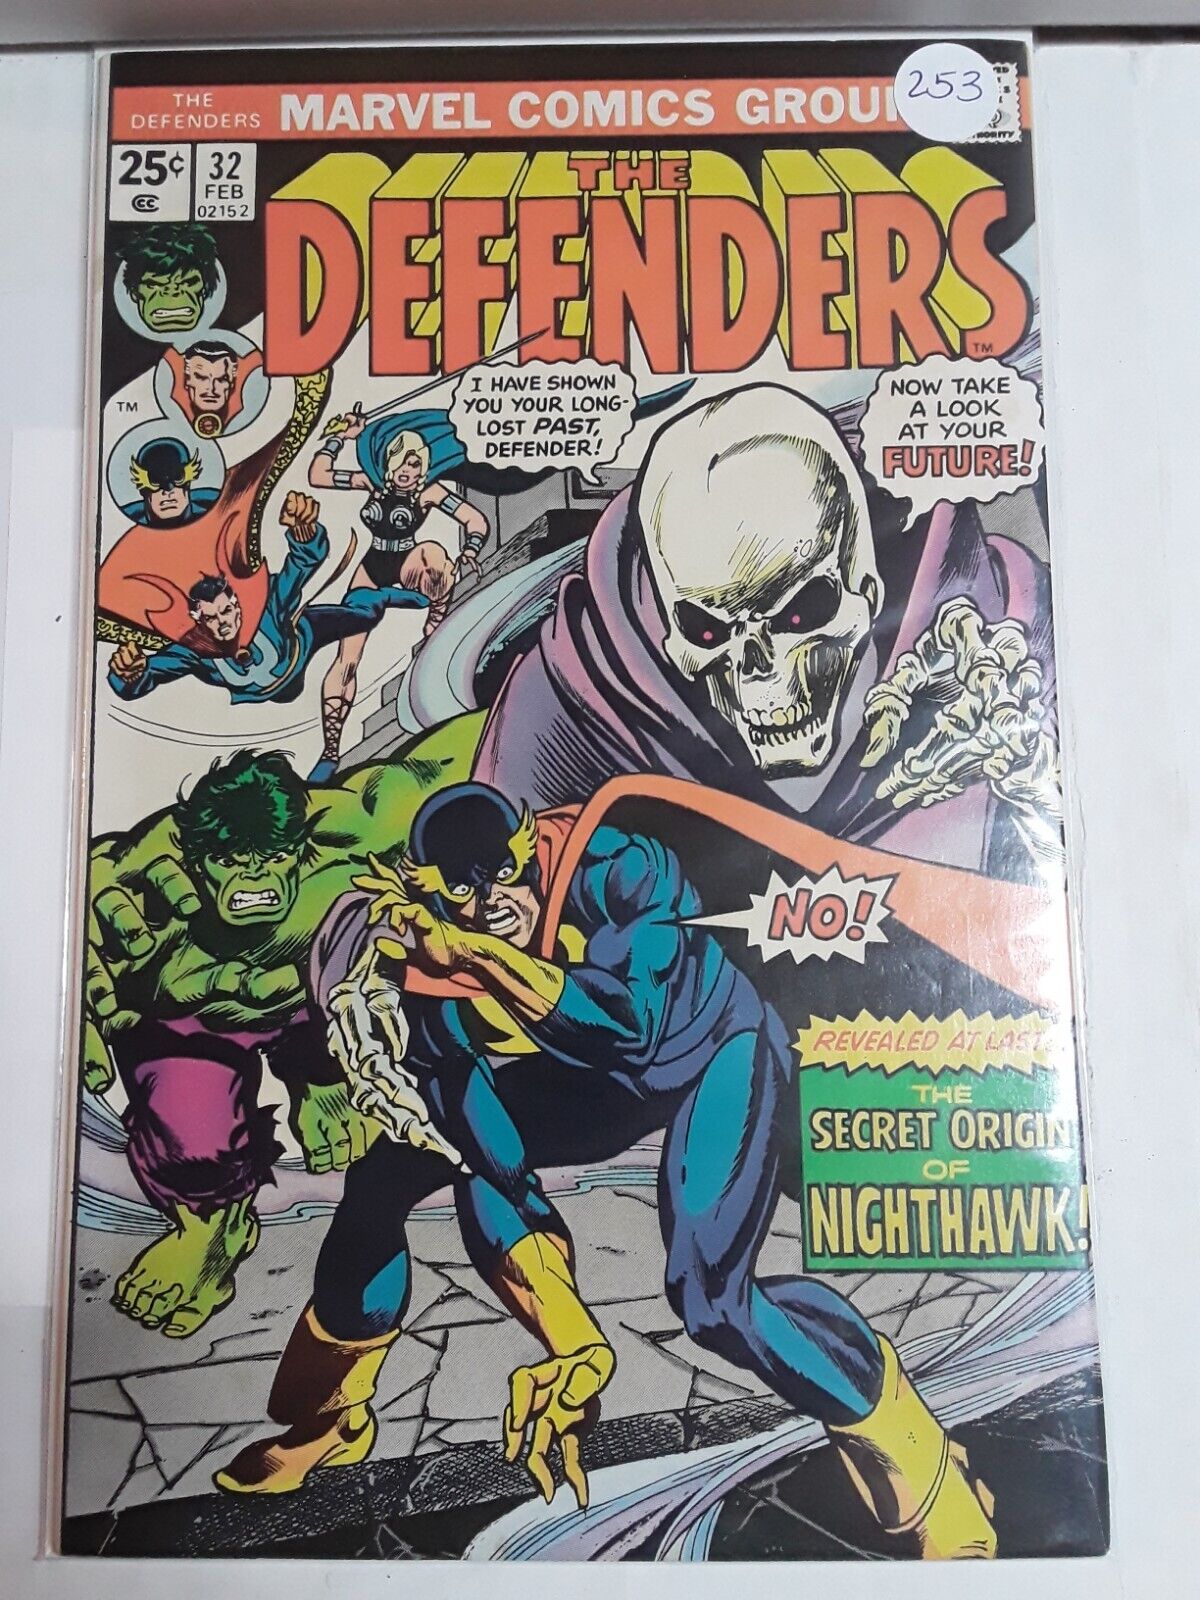 The Defenders #32 - Origin of Nighthawk (Kyle Richmond)